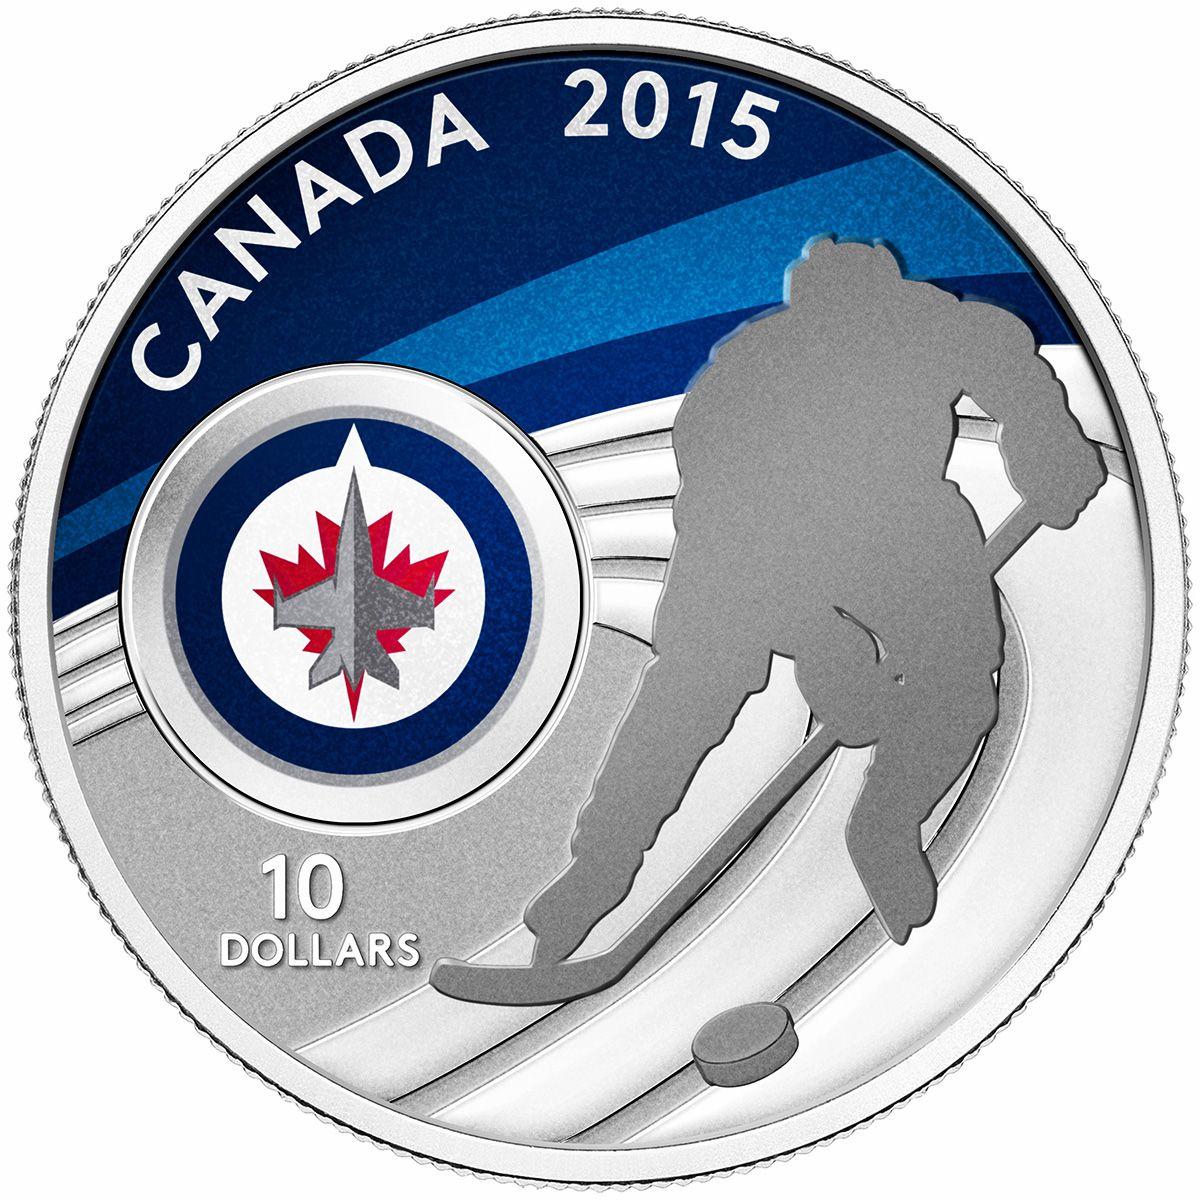 NHL Jets Logo - 2015 $10 Fine Silver Coin - Winnipeg Jets | Royal Canadian Mint Coins